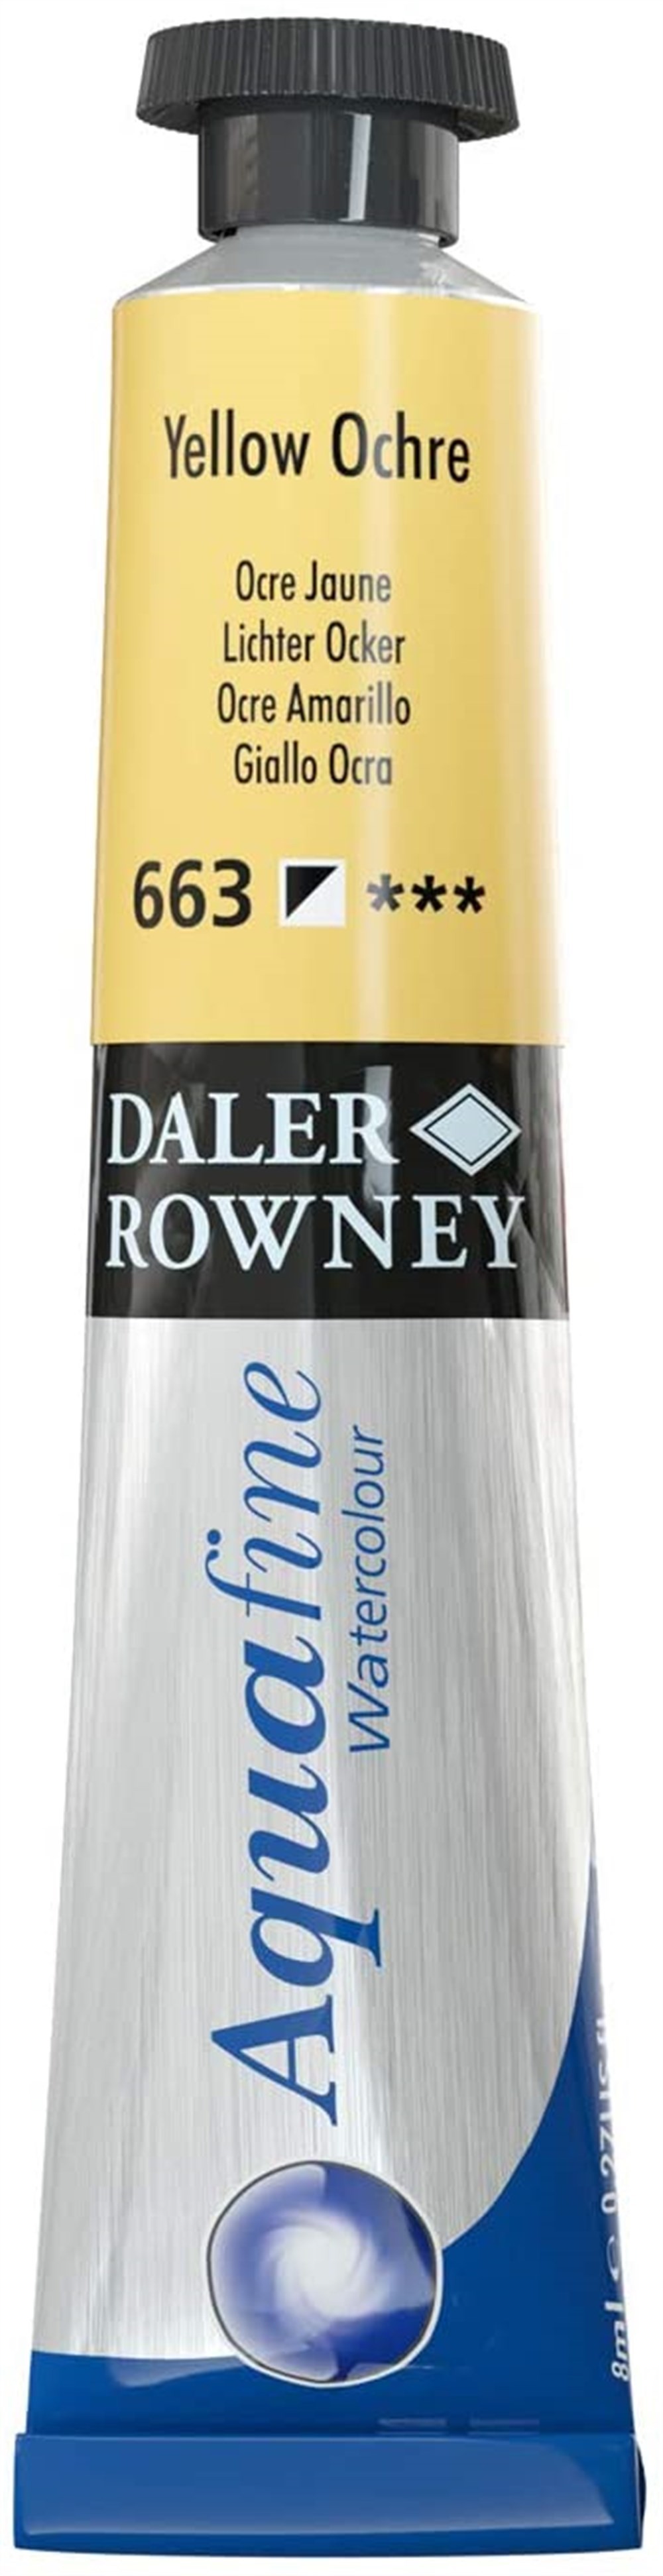 Daler Rowney Aquafine Watercolour 8ml Tube 663 Yellow Ochre